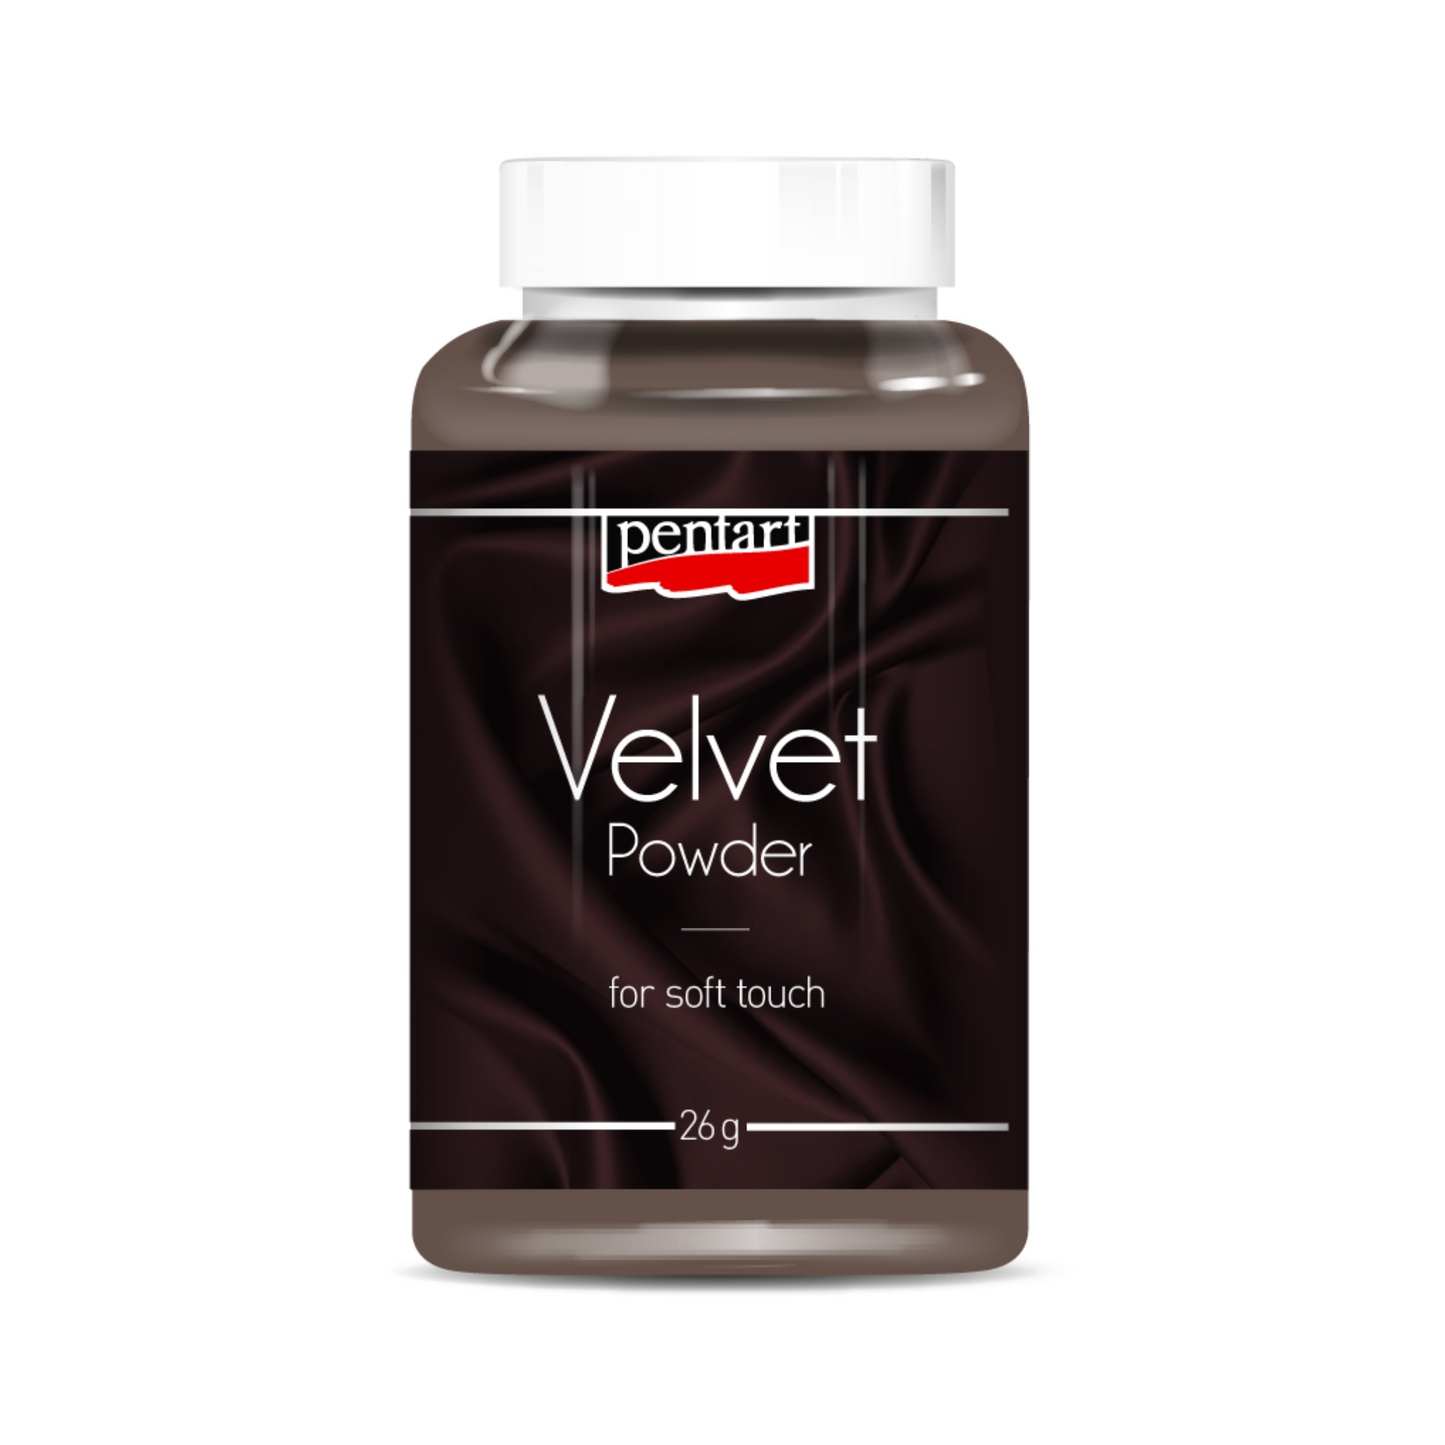 Velvet Powder by Pentart. Earthy Brown 26g available at Milton's Daughter